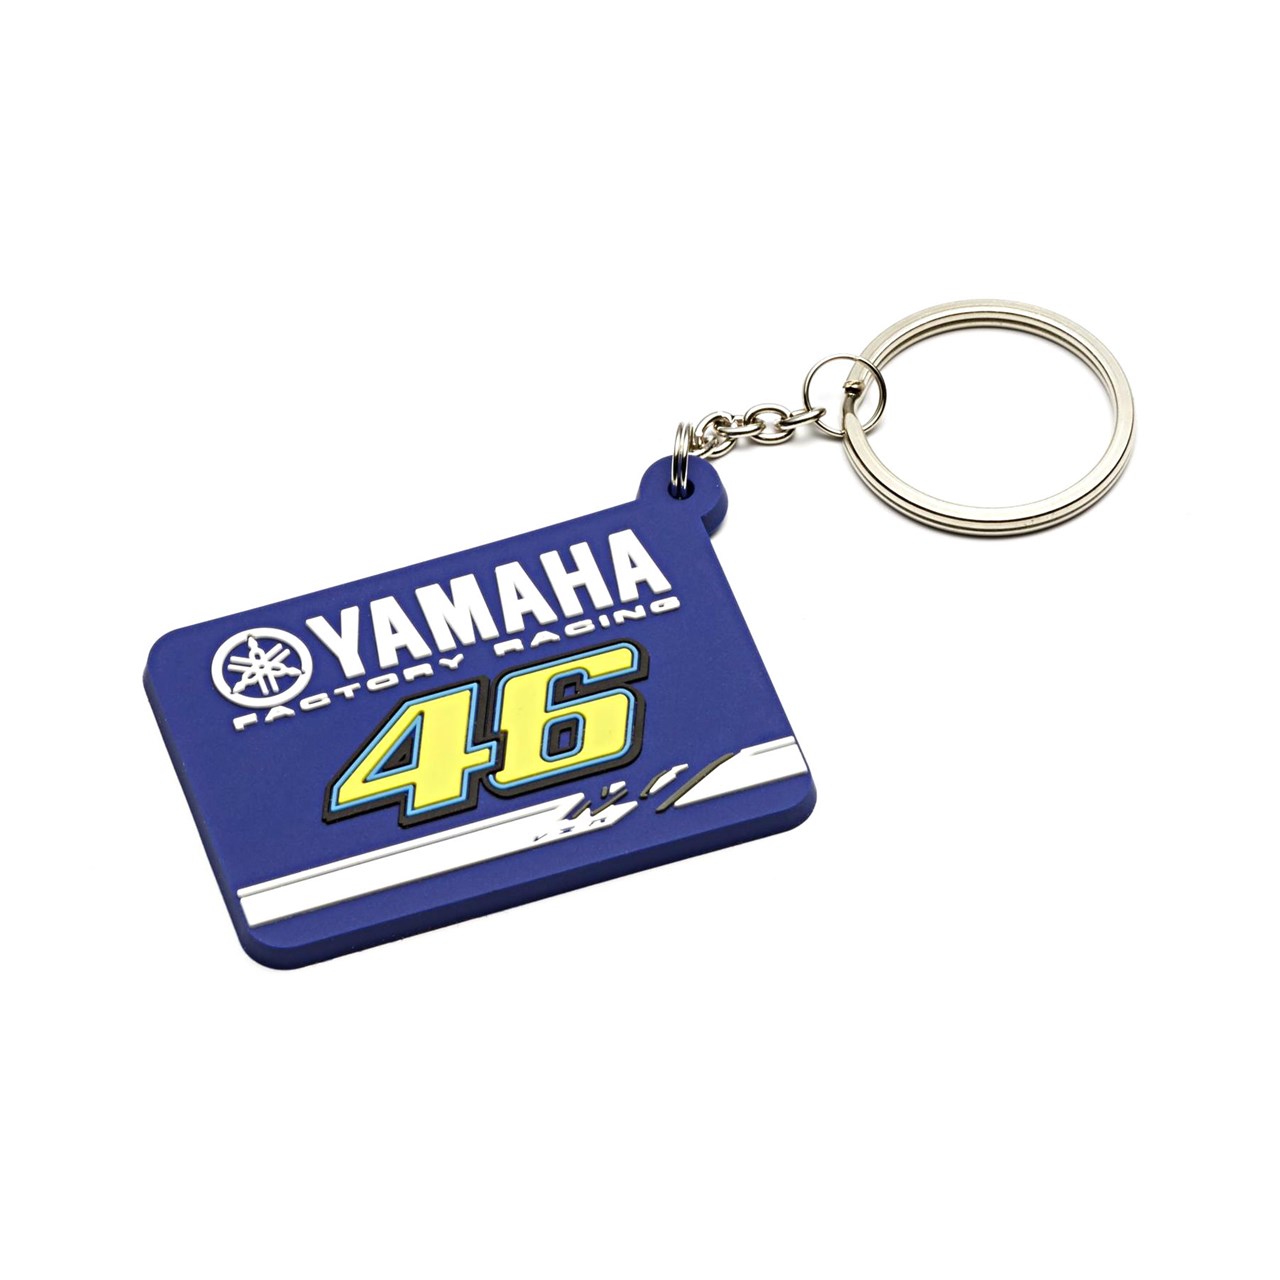 Shop.2ri.de. Yamaha - Rossi Schlüsselanhänger